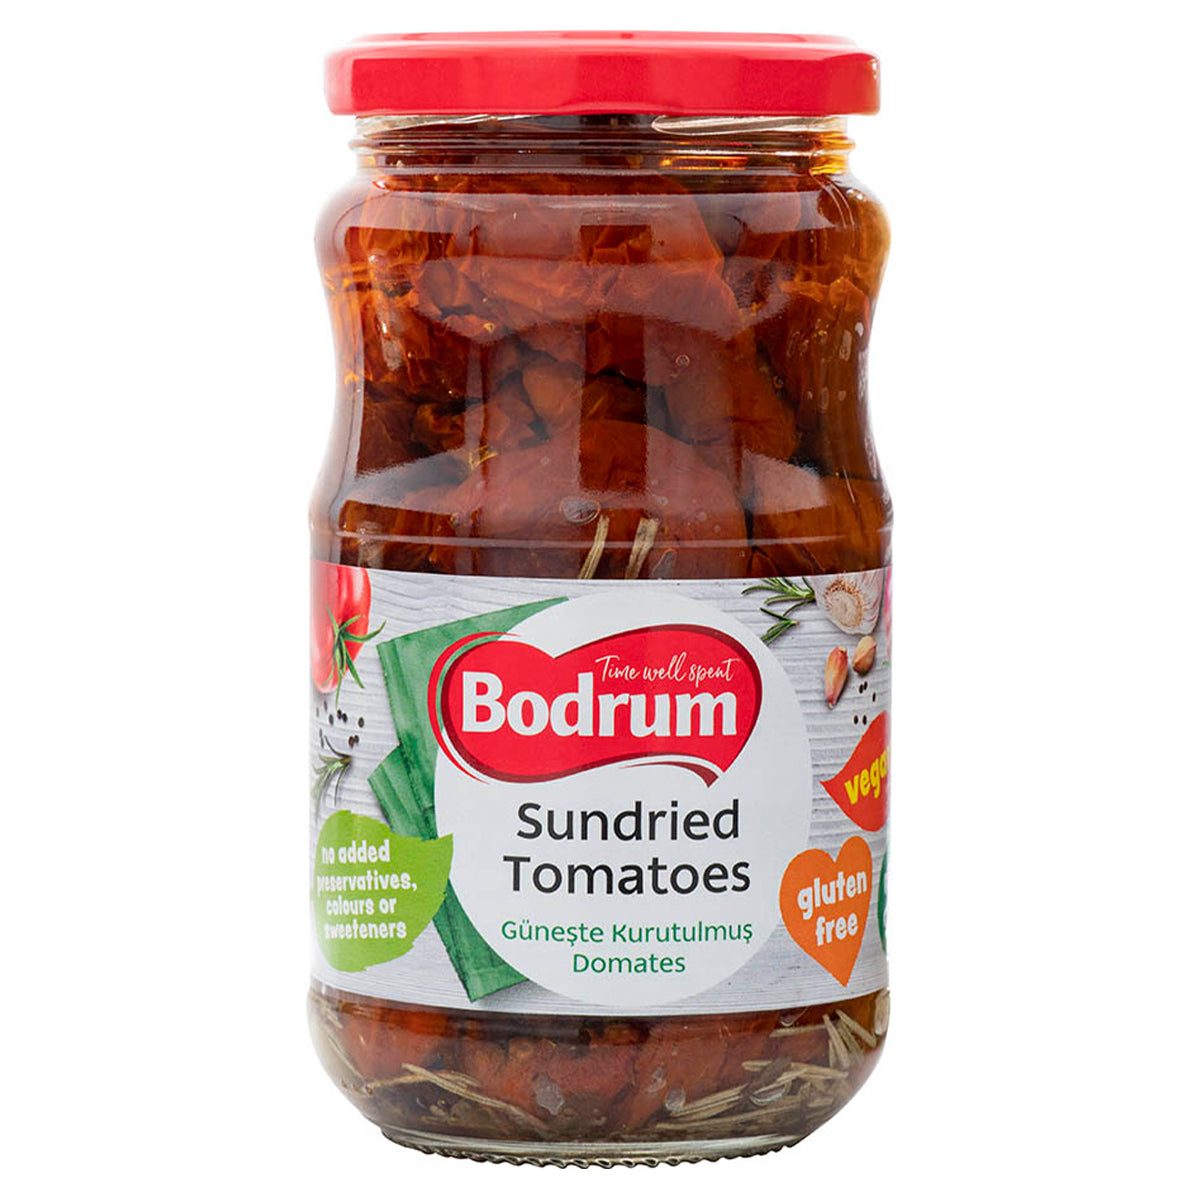 Bodrum - Sun Dried Tomatoes - 330g in a jar.